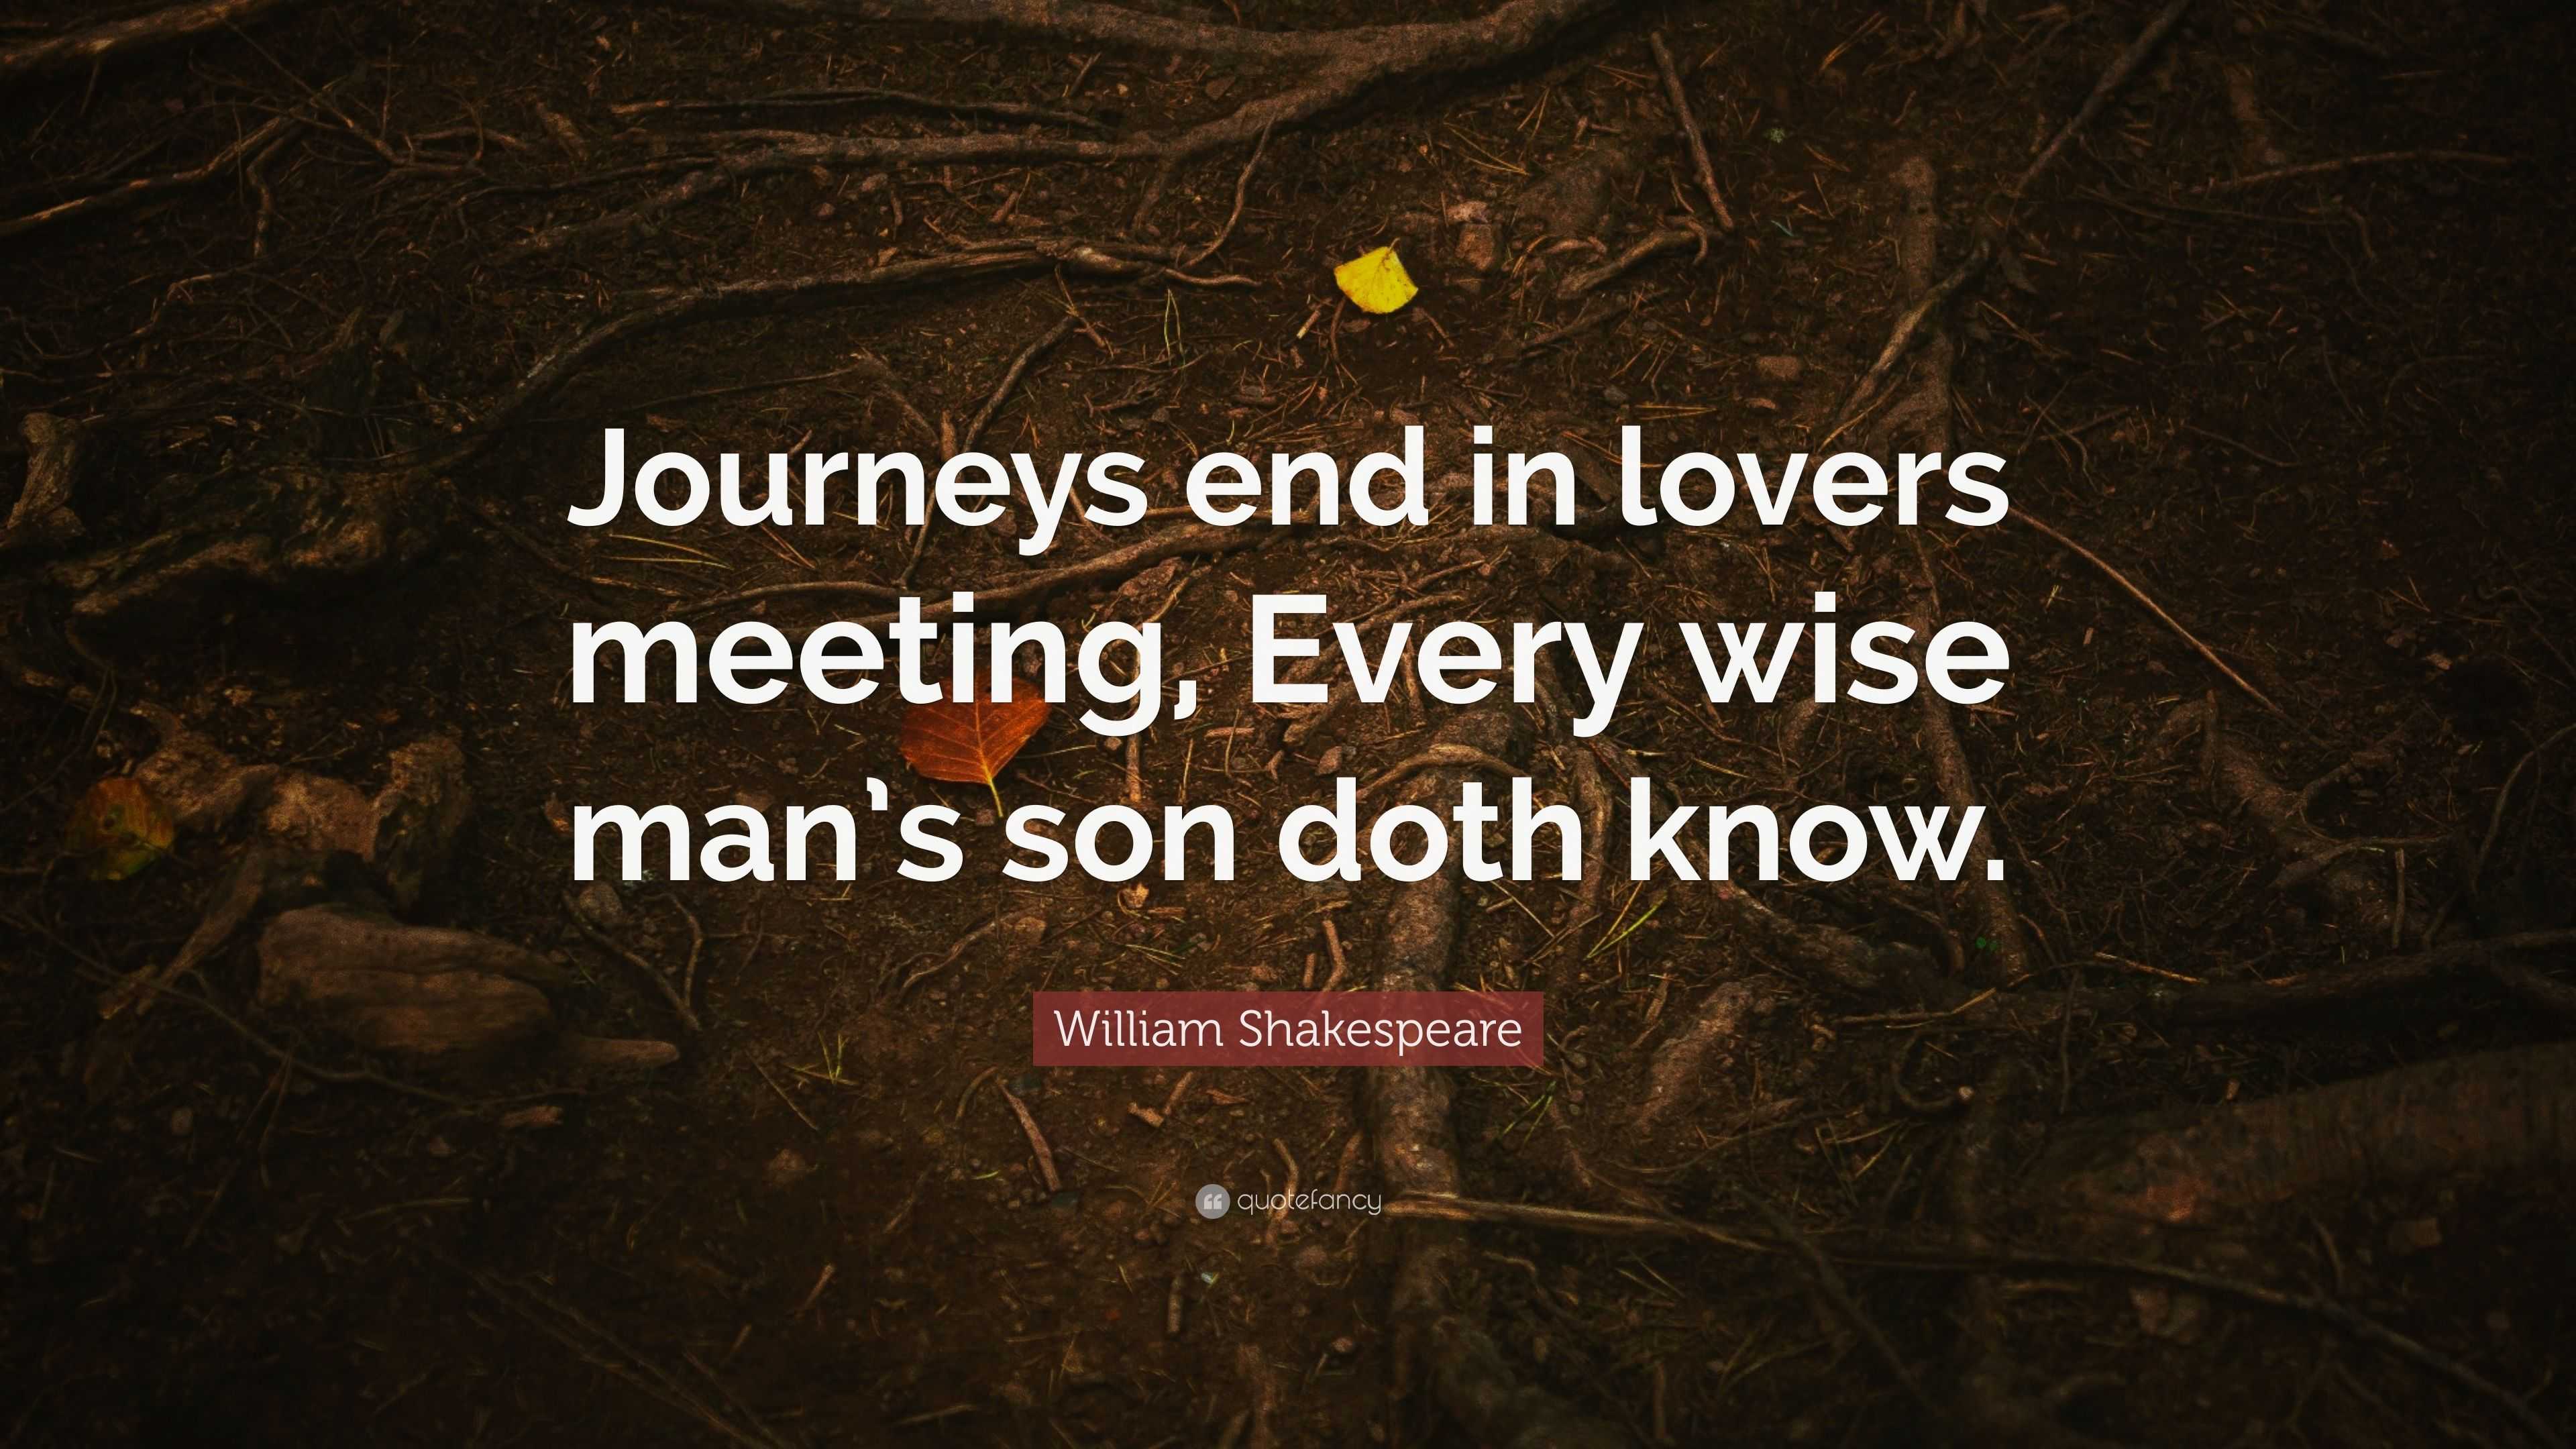 journeys end in lovers meeting